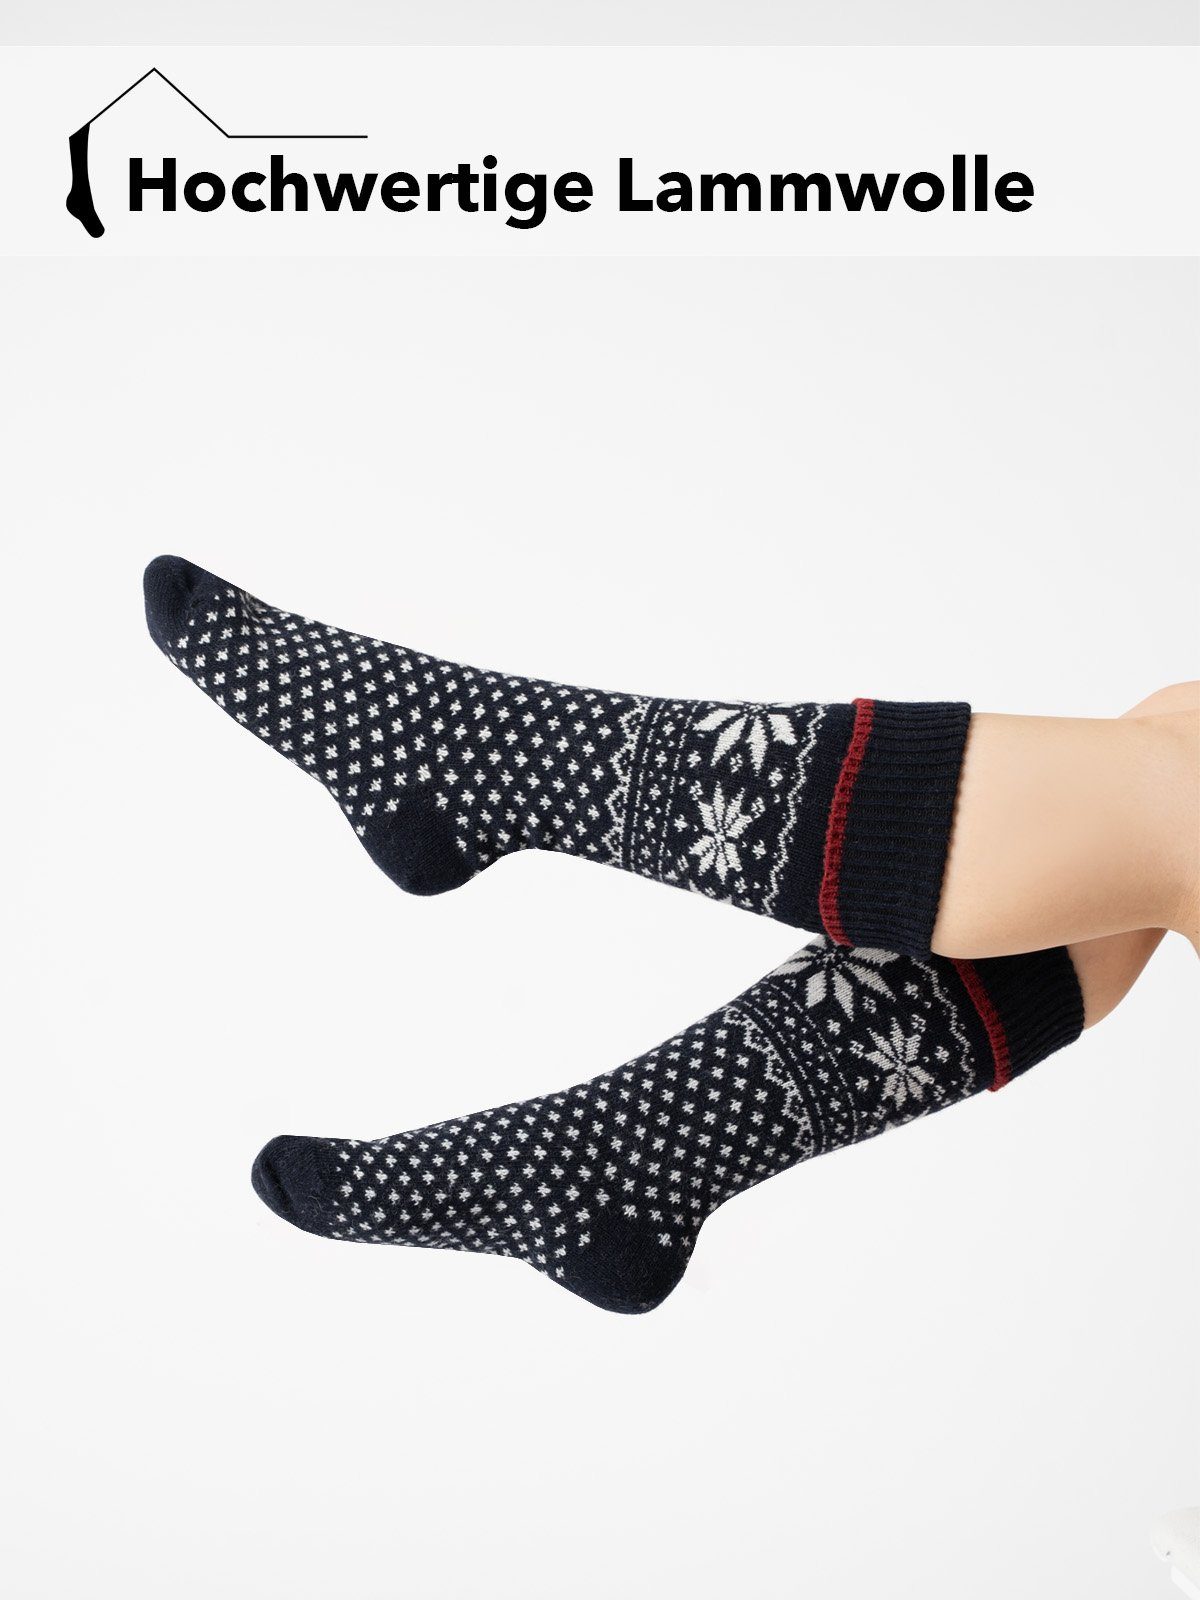 HomeOfSocks Nordic 70% Design Hyggelig Socken Wolle Navy Warm Norwegischem Wollsocke Lamm Dicke In "Norwegen-Lammwolle" Hohem Aus Kuschelsocken Socken Skandinavische Mit Wollanteil